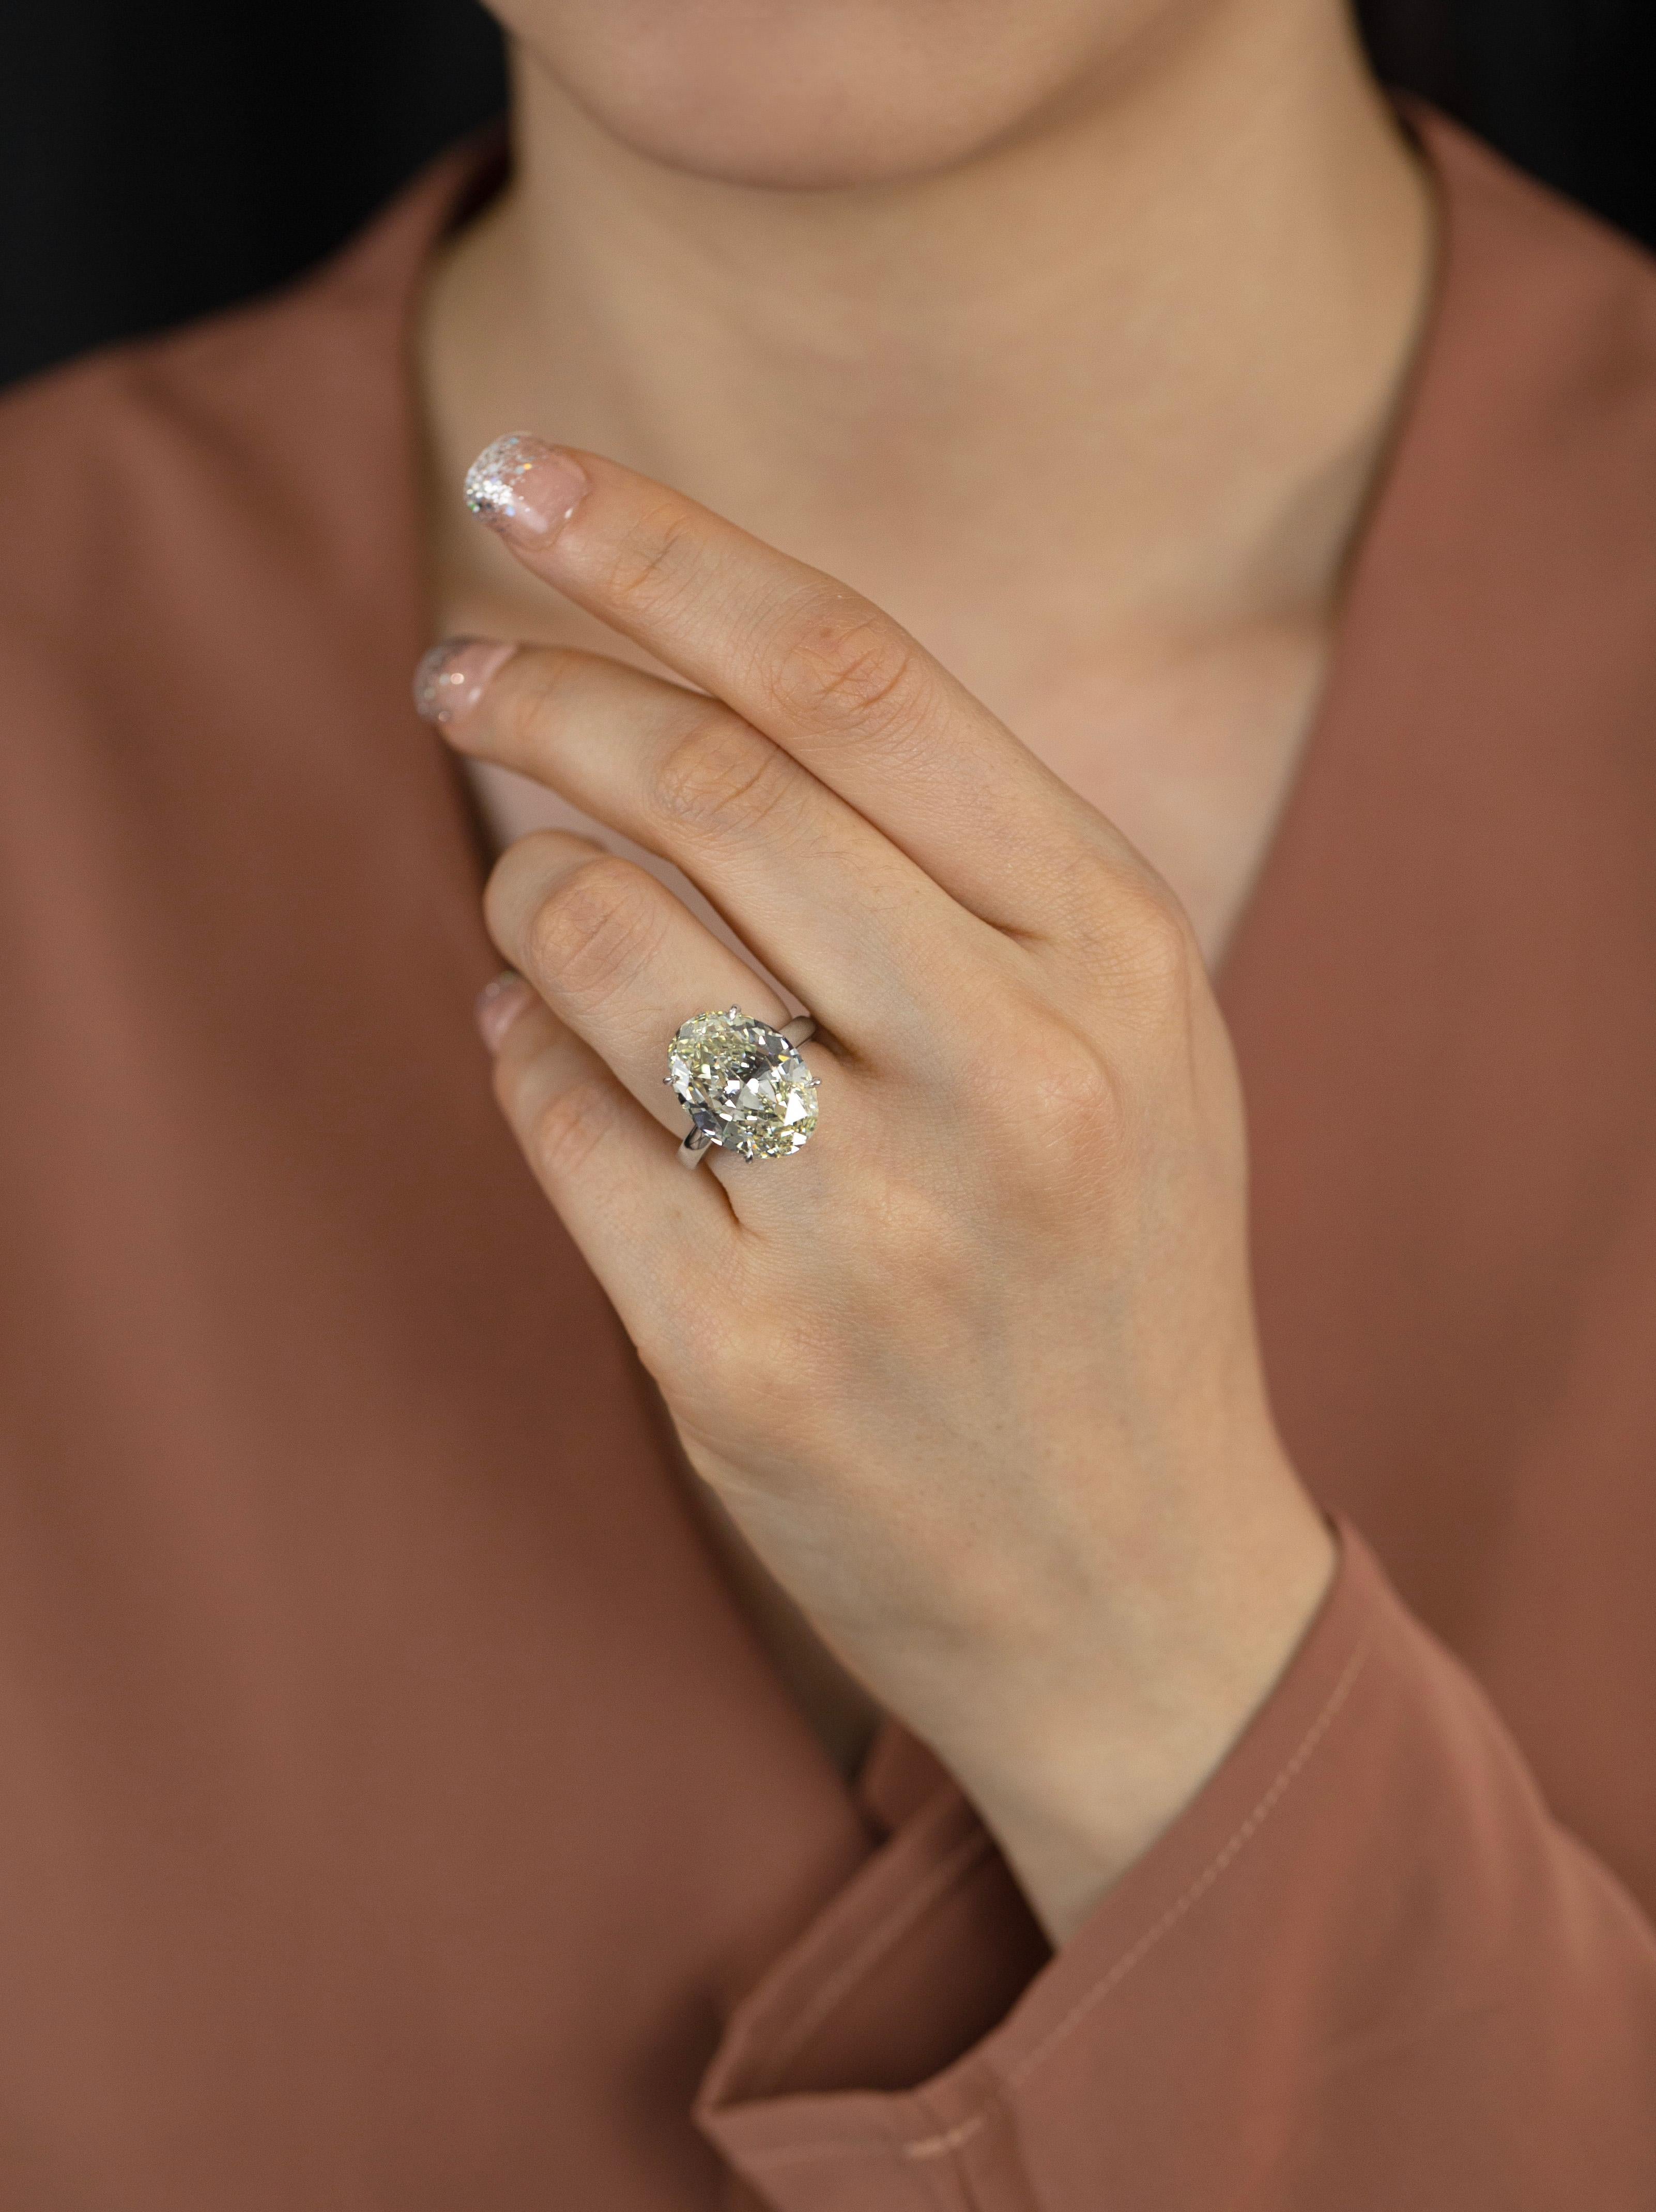 50k diamond engagement ring